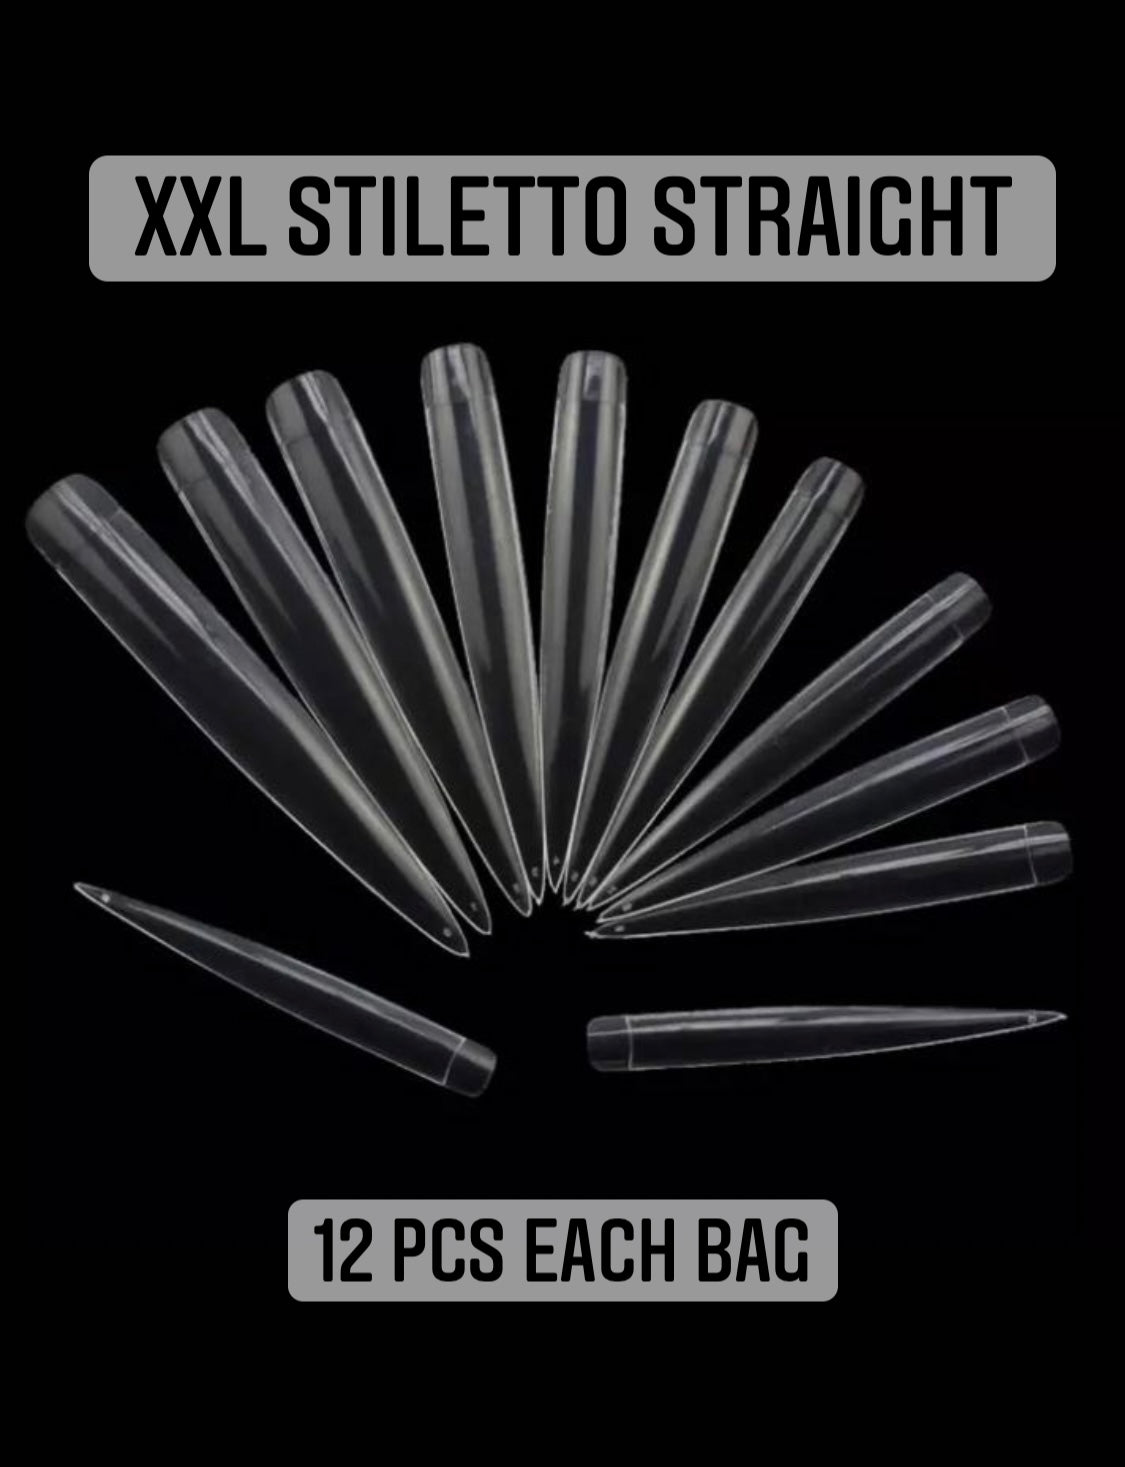 XXL Stiletto Straight Tips